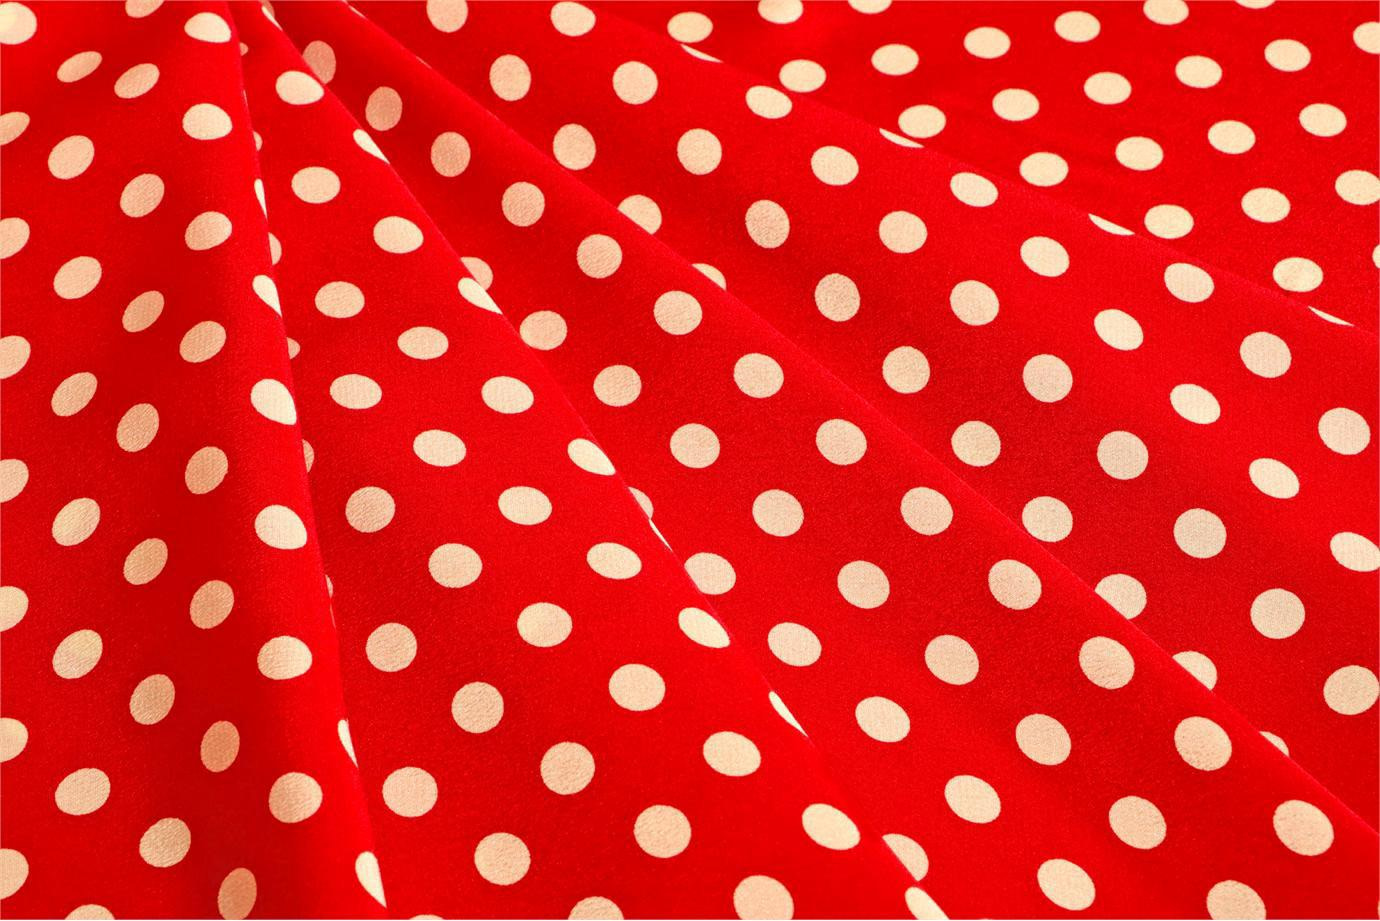 Red, White Silk Polka Dot Fabric - Crepe Se Omnibus Pois 201303